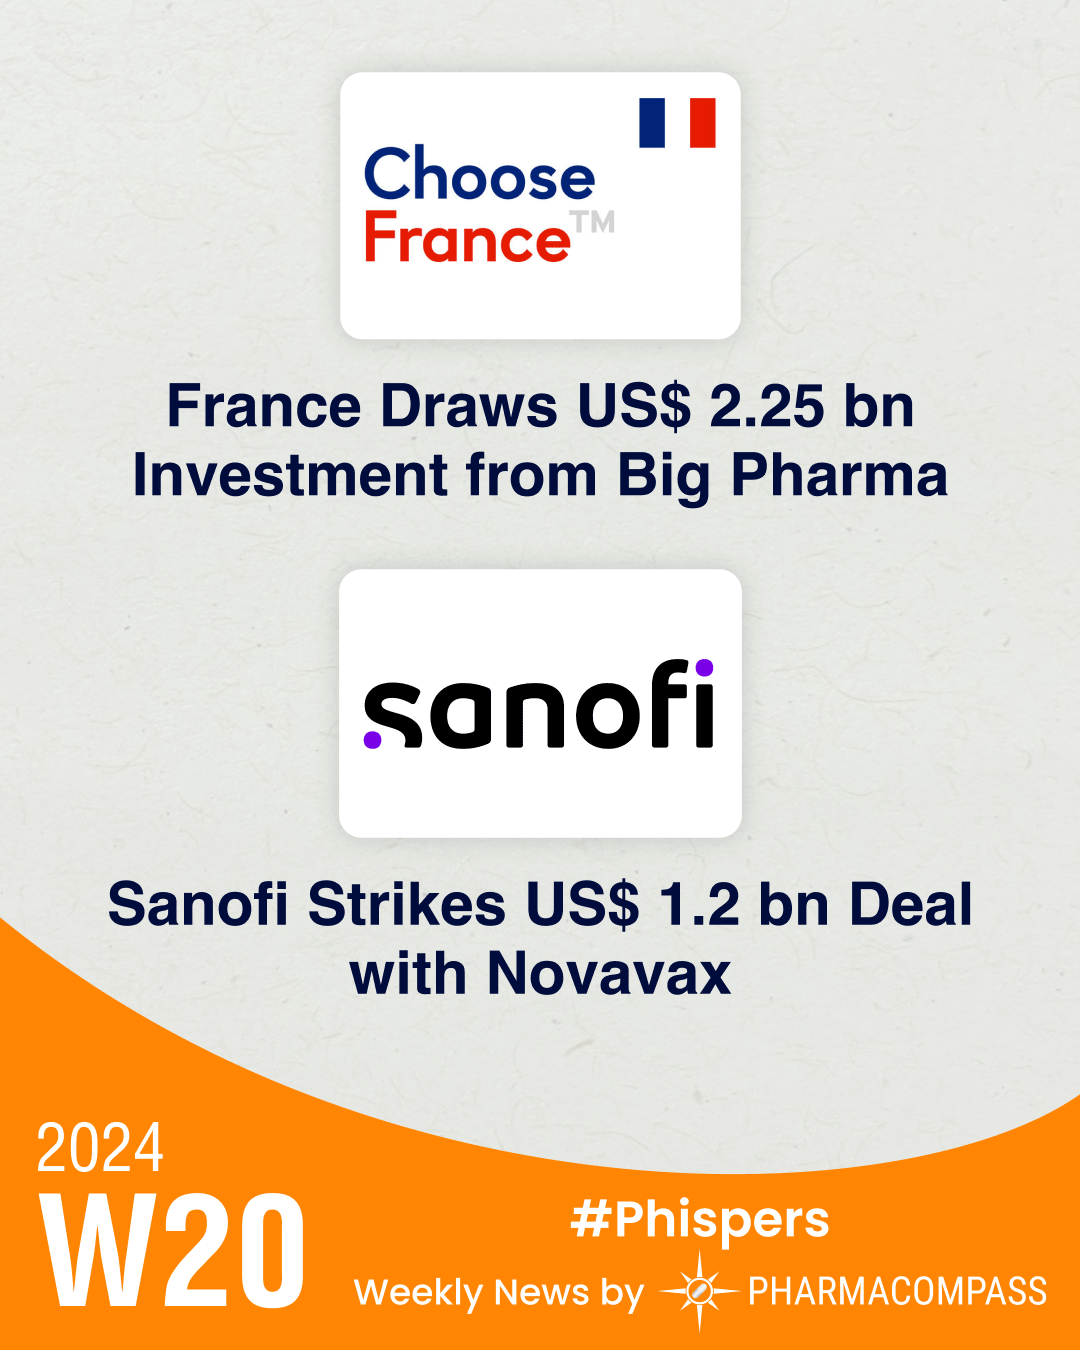 France draws US$ 2.25 bn investment from Big Pharma; Sanofi strikes US$ 1.2 bn deal with Novavax